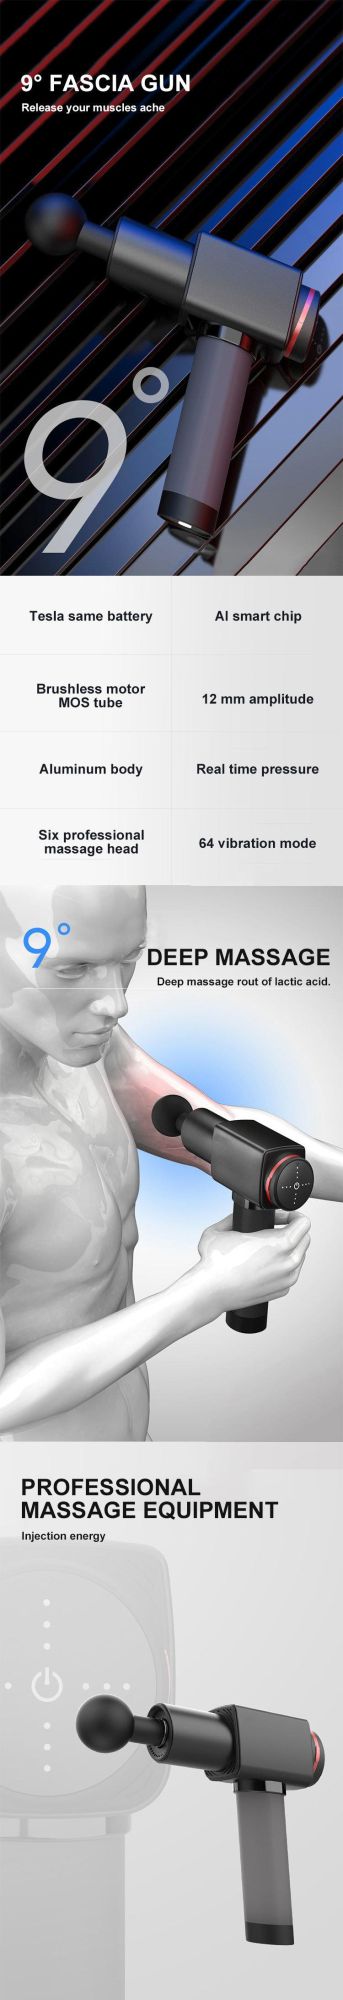 Reduce Inflammation 24V Cordless Massage Gun with Box